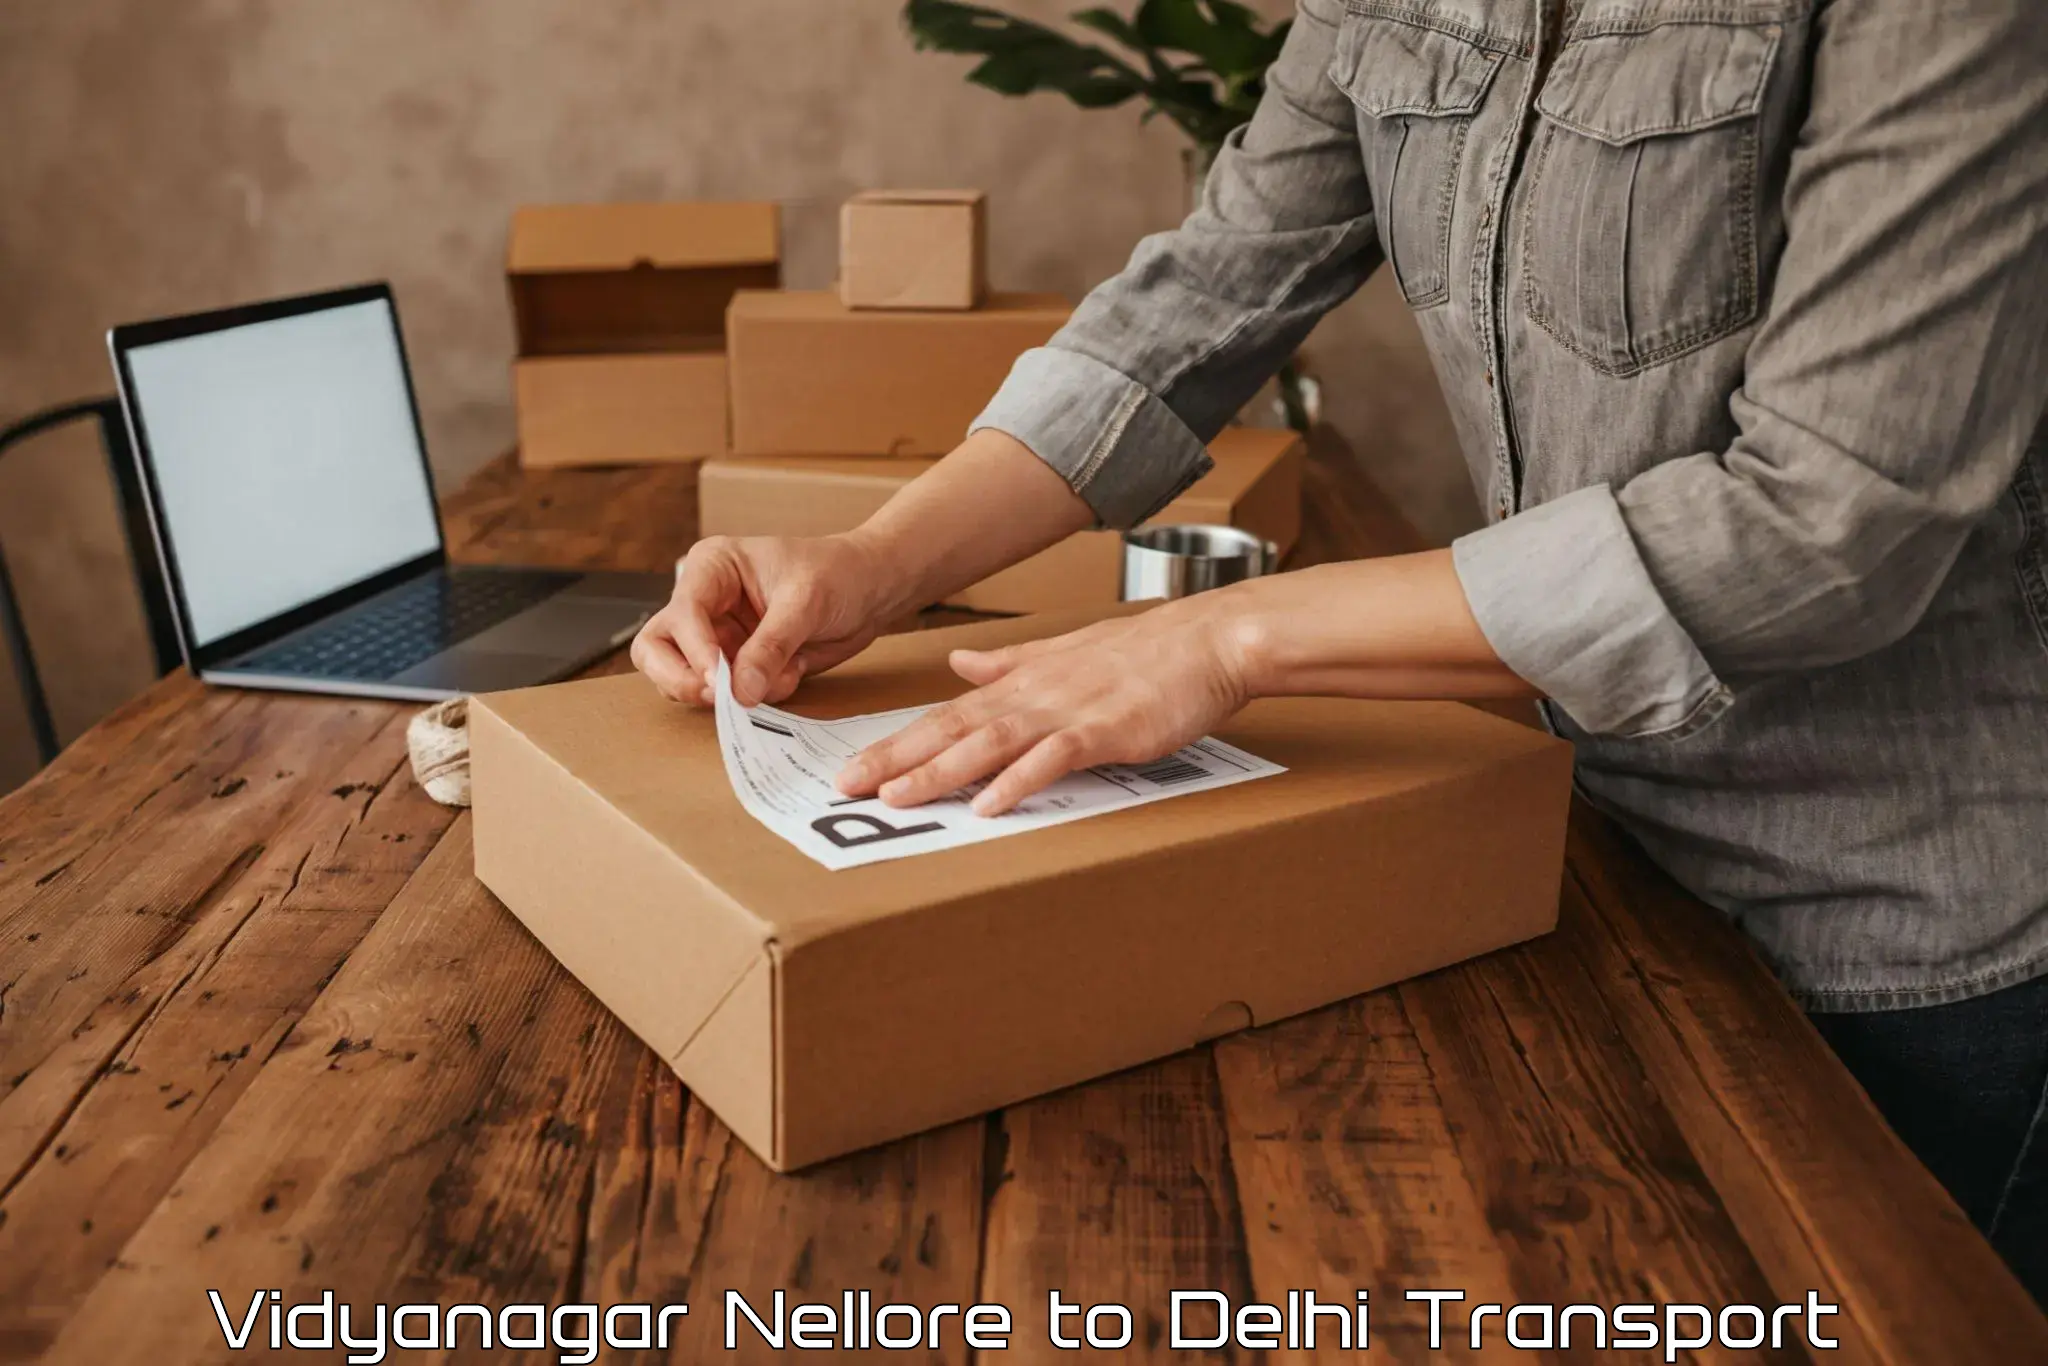 Transportation services in Vidyanagar Nellore to East Delhi